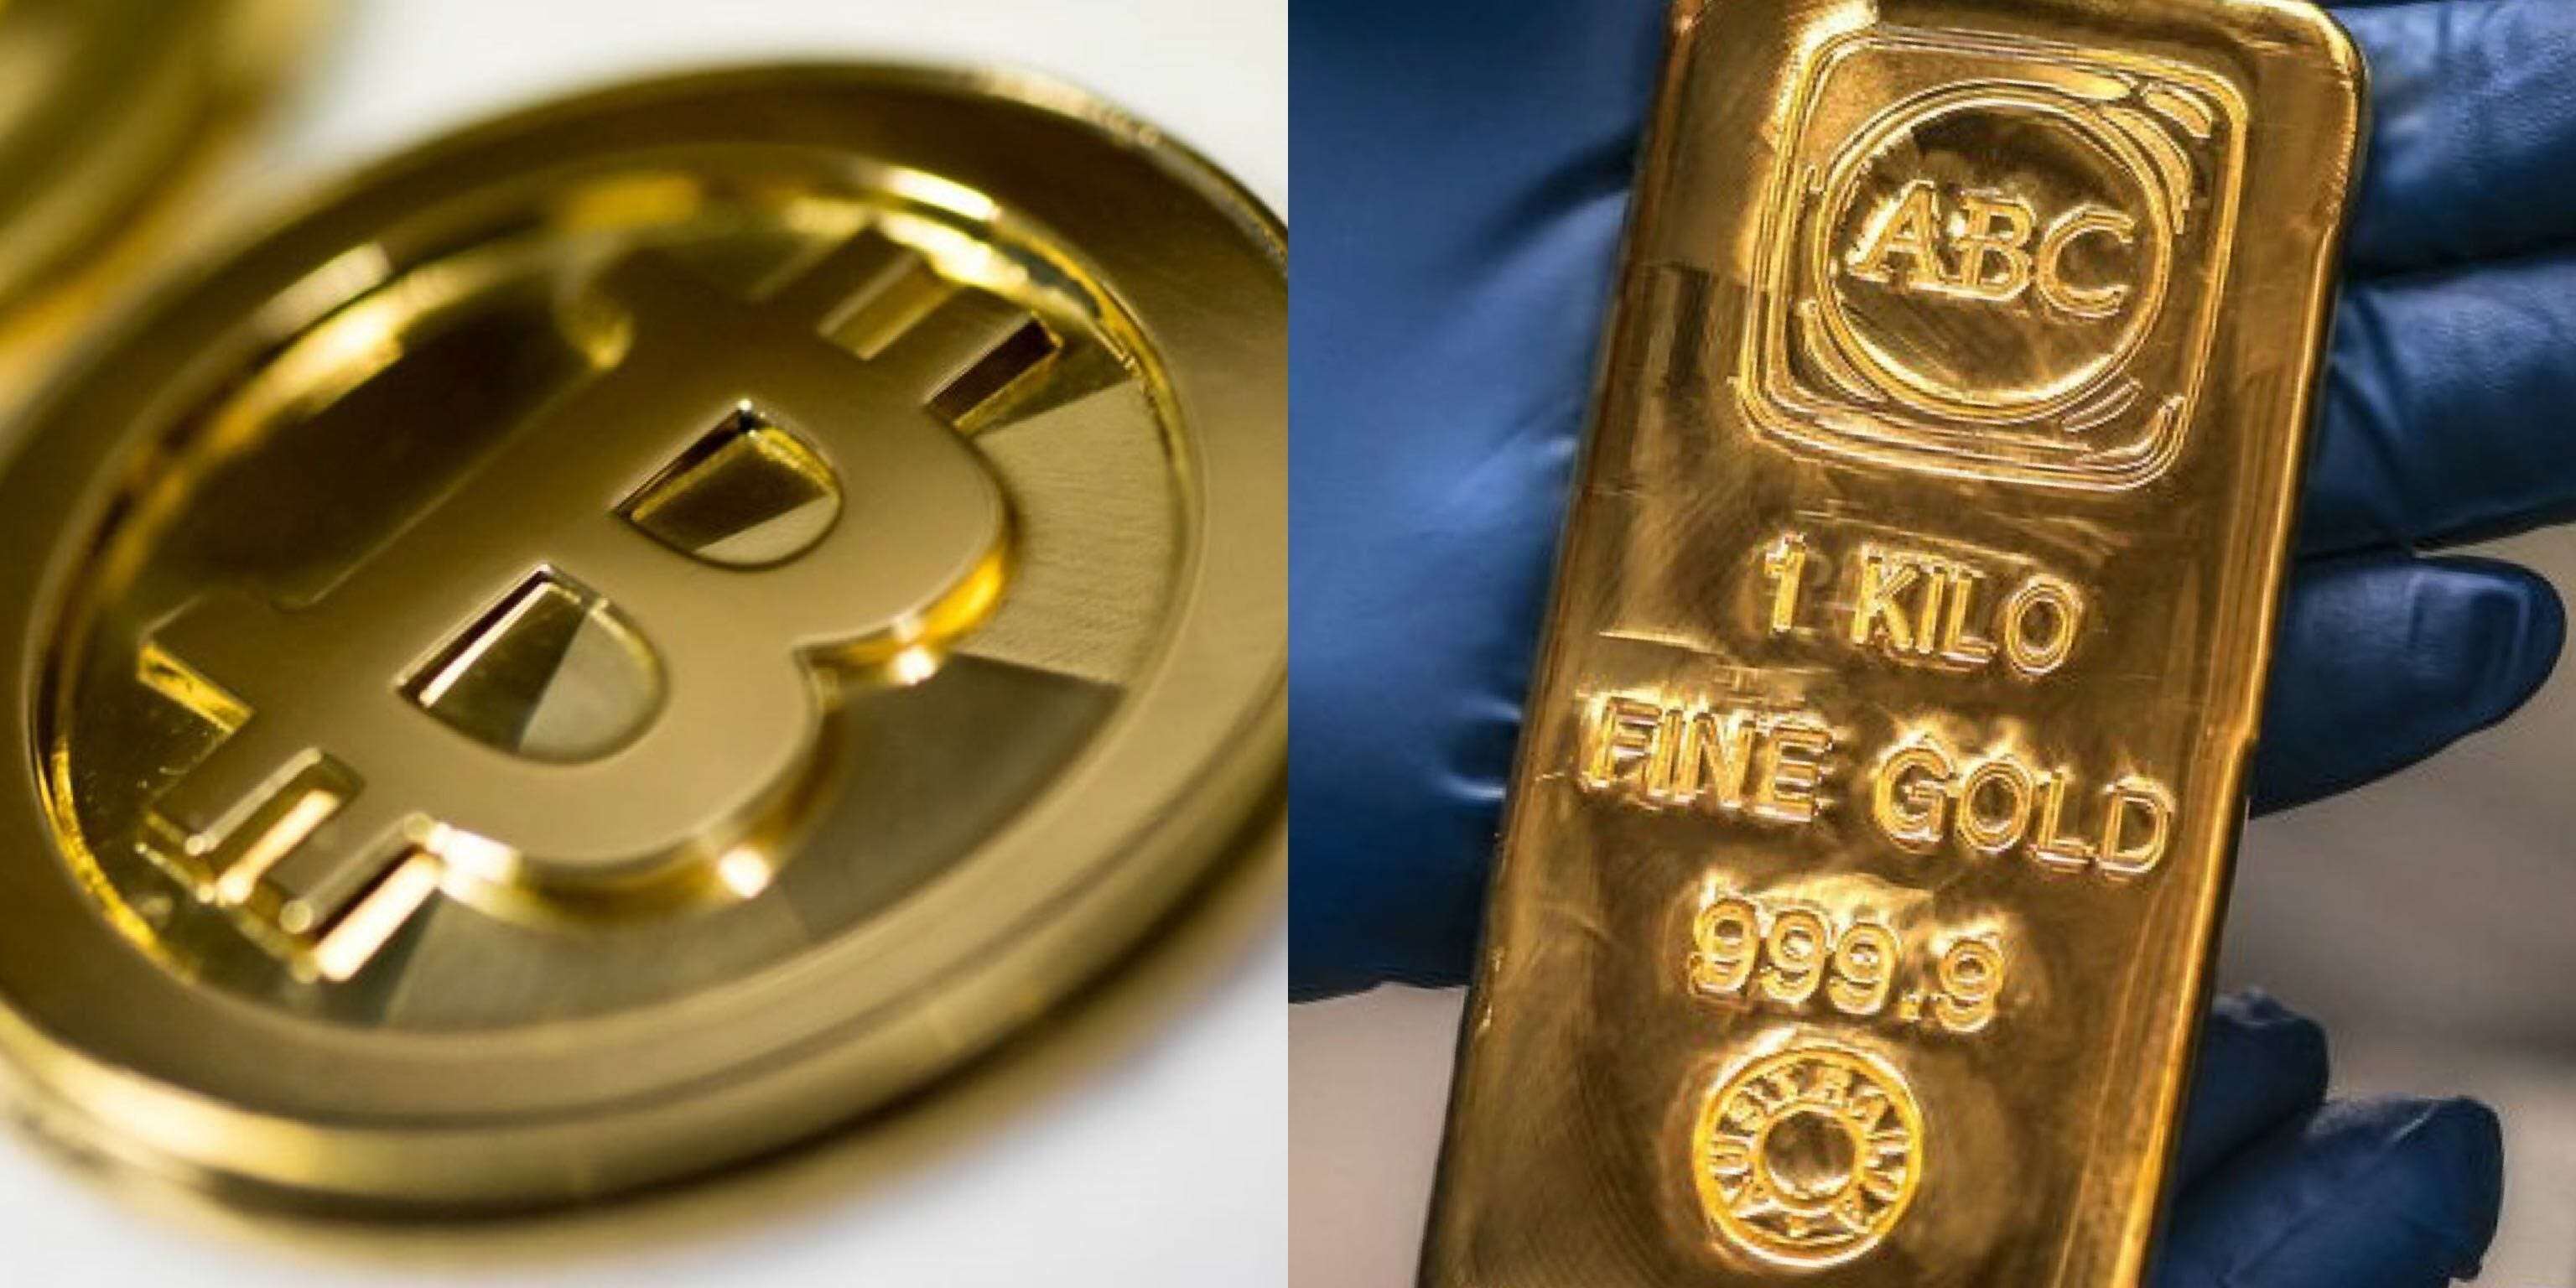 cours gold etoro|jaunimoakademija.lt Trade Bitcoin | La Maistas